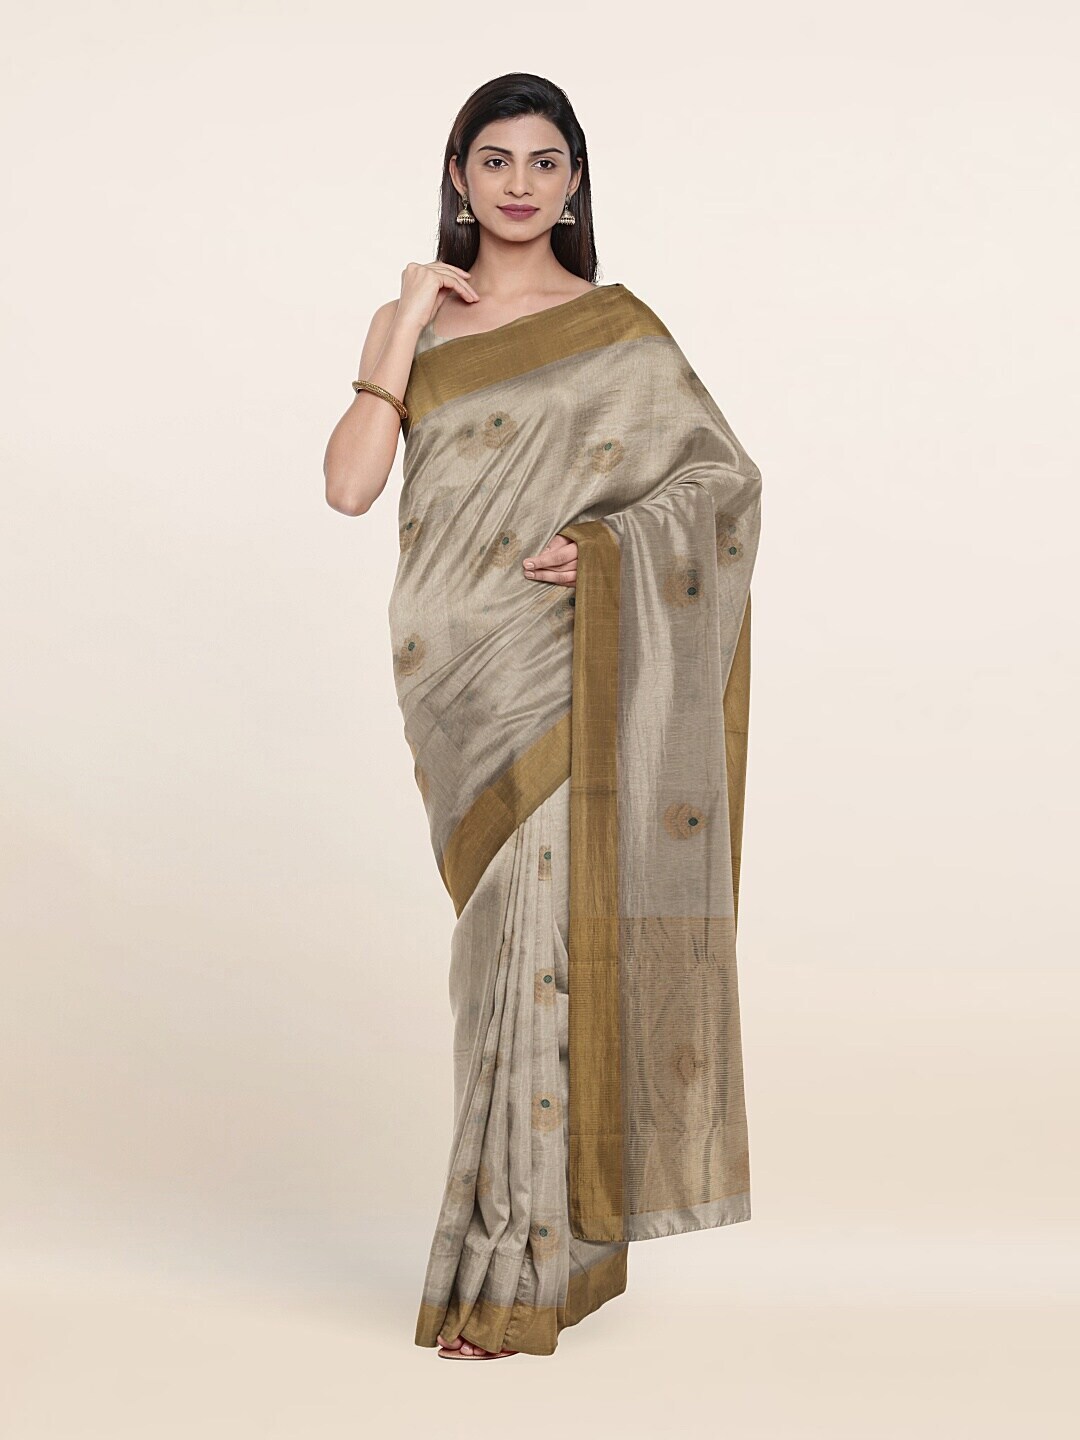 Pothys Grey & Gold-Toned Floral Zari Silk Cotton Saree Price in India